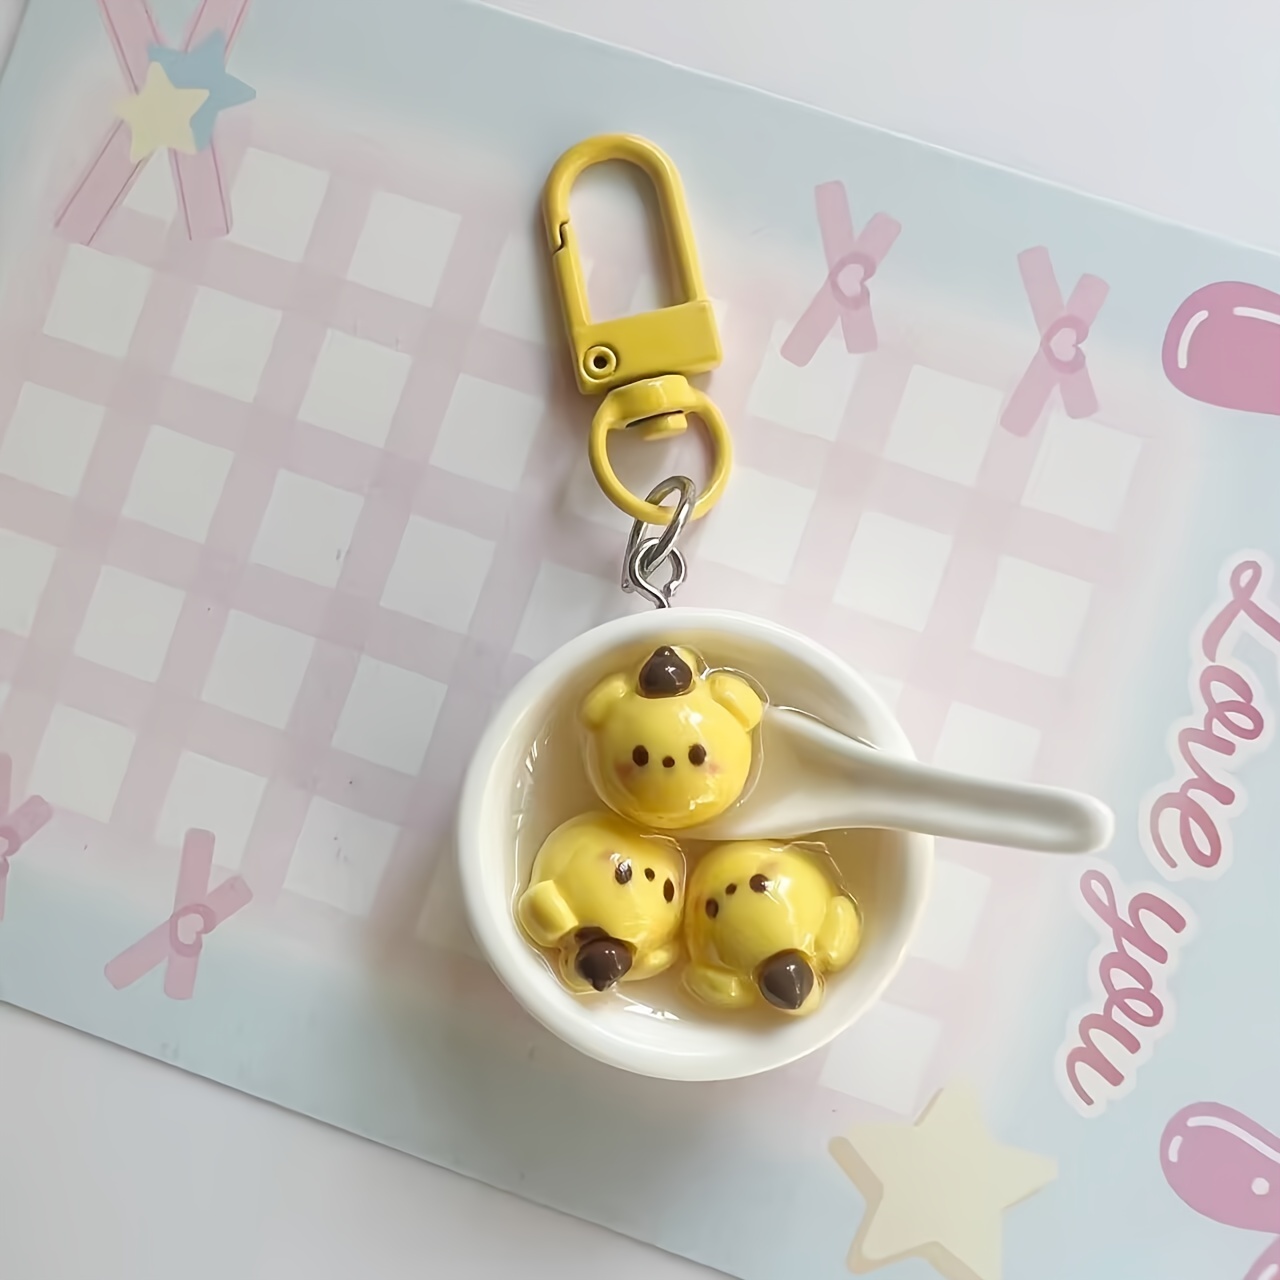 Star Key and Key Lock Resin Charms | Kawaii Jewelry DIY | Cute Keychain  Charm | Decoden Cabochons (2 pcs / Pink)